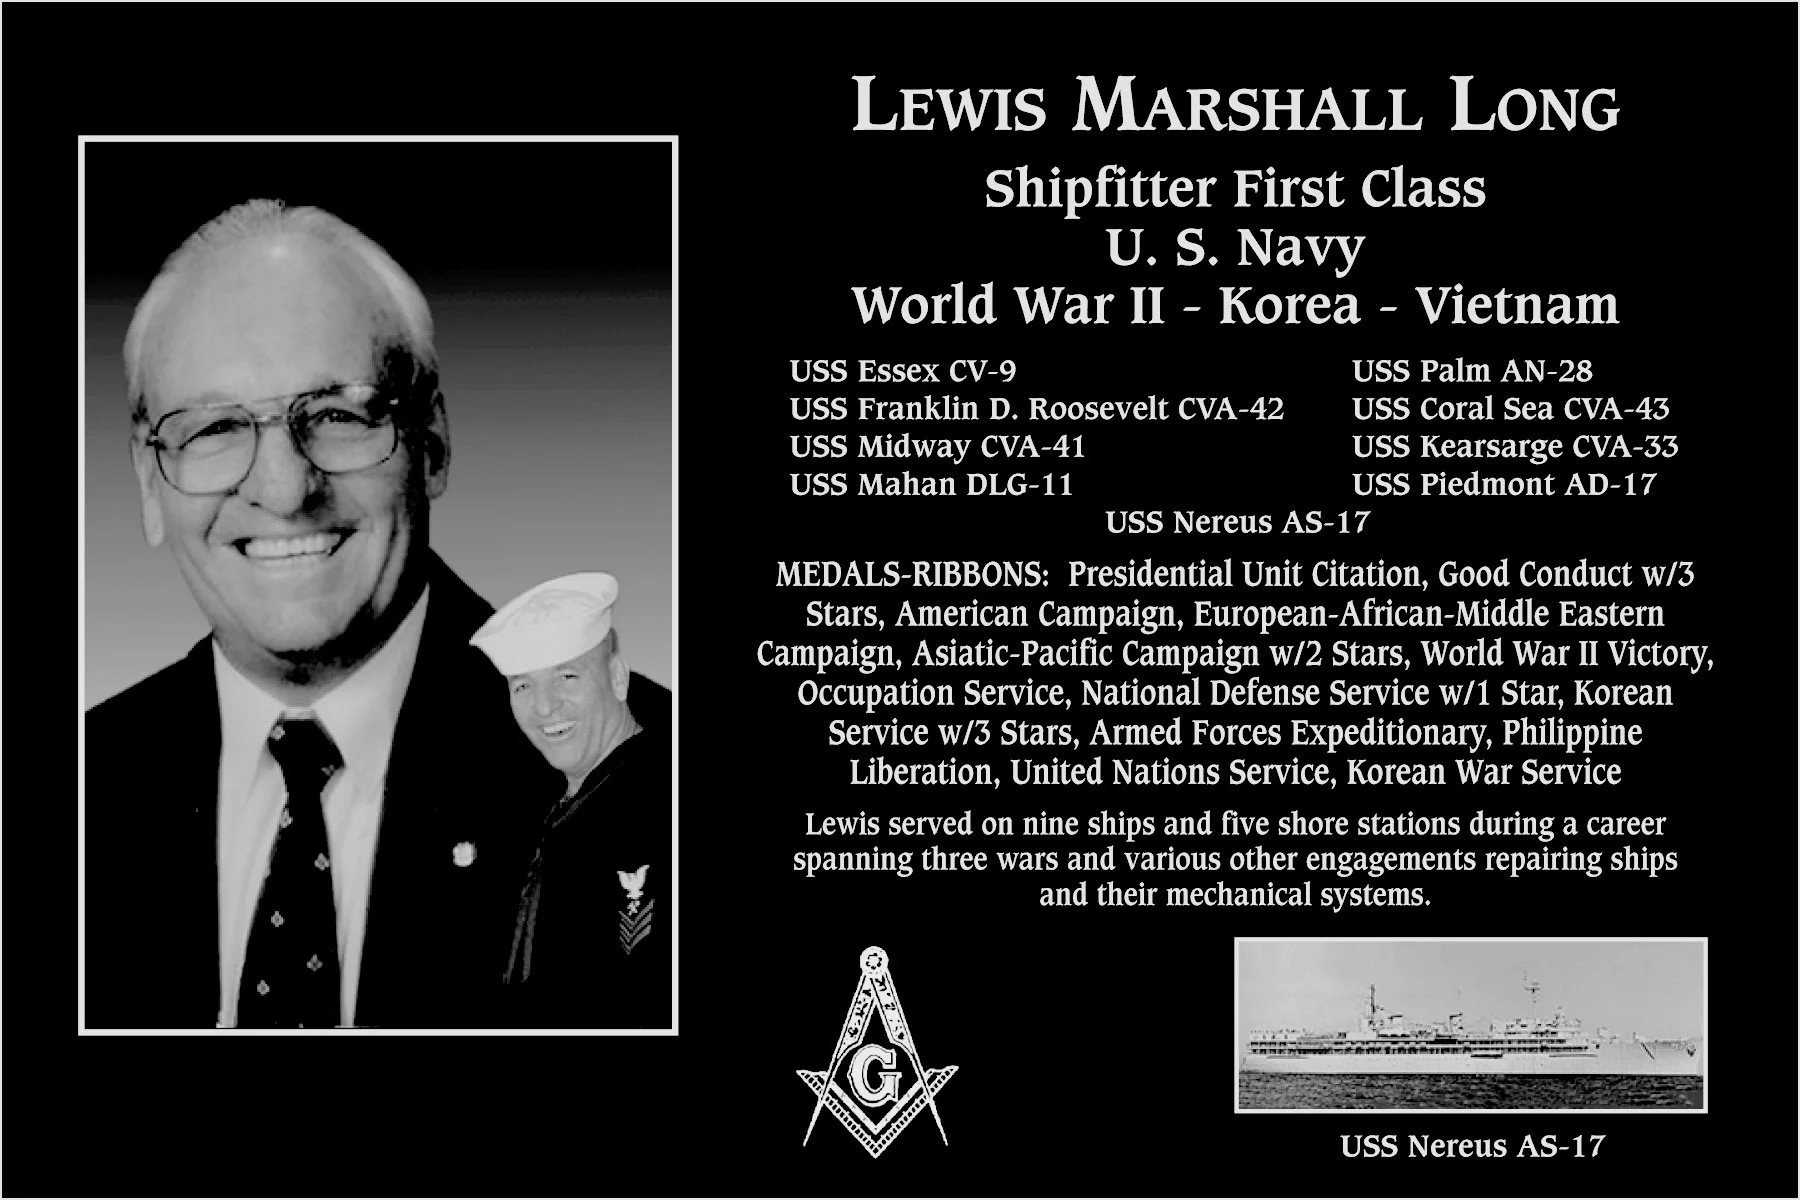 Lewis Marshall Long